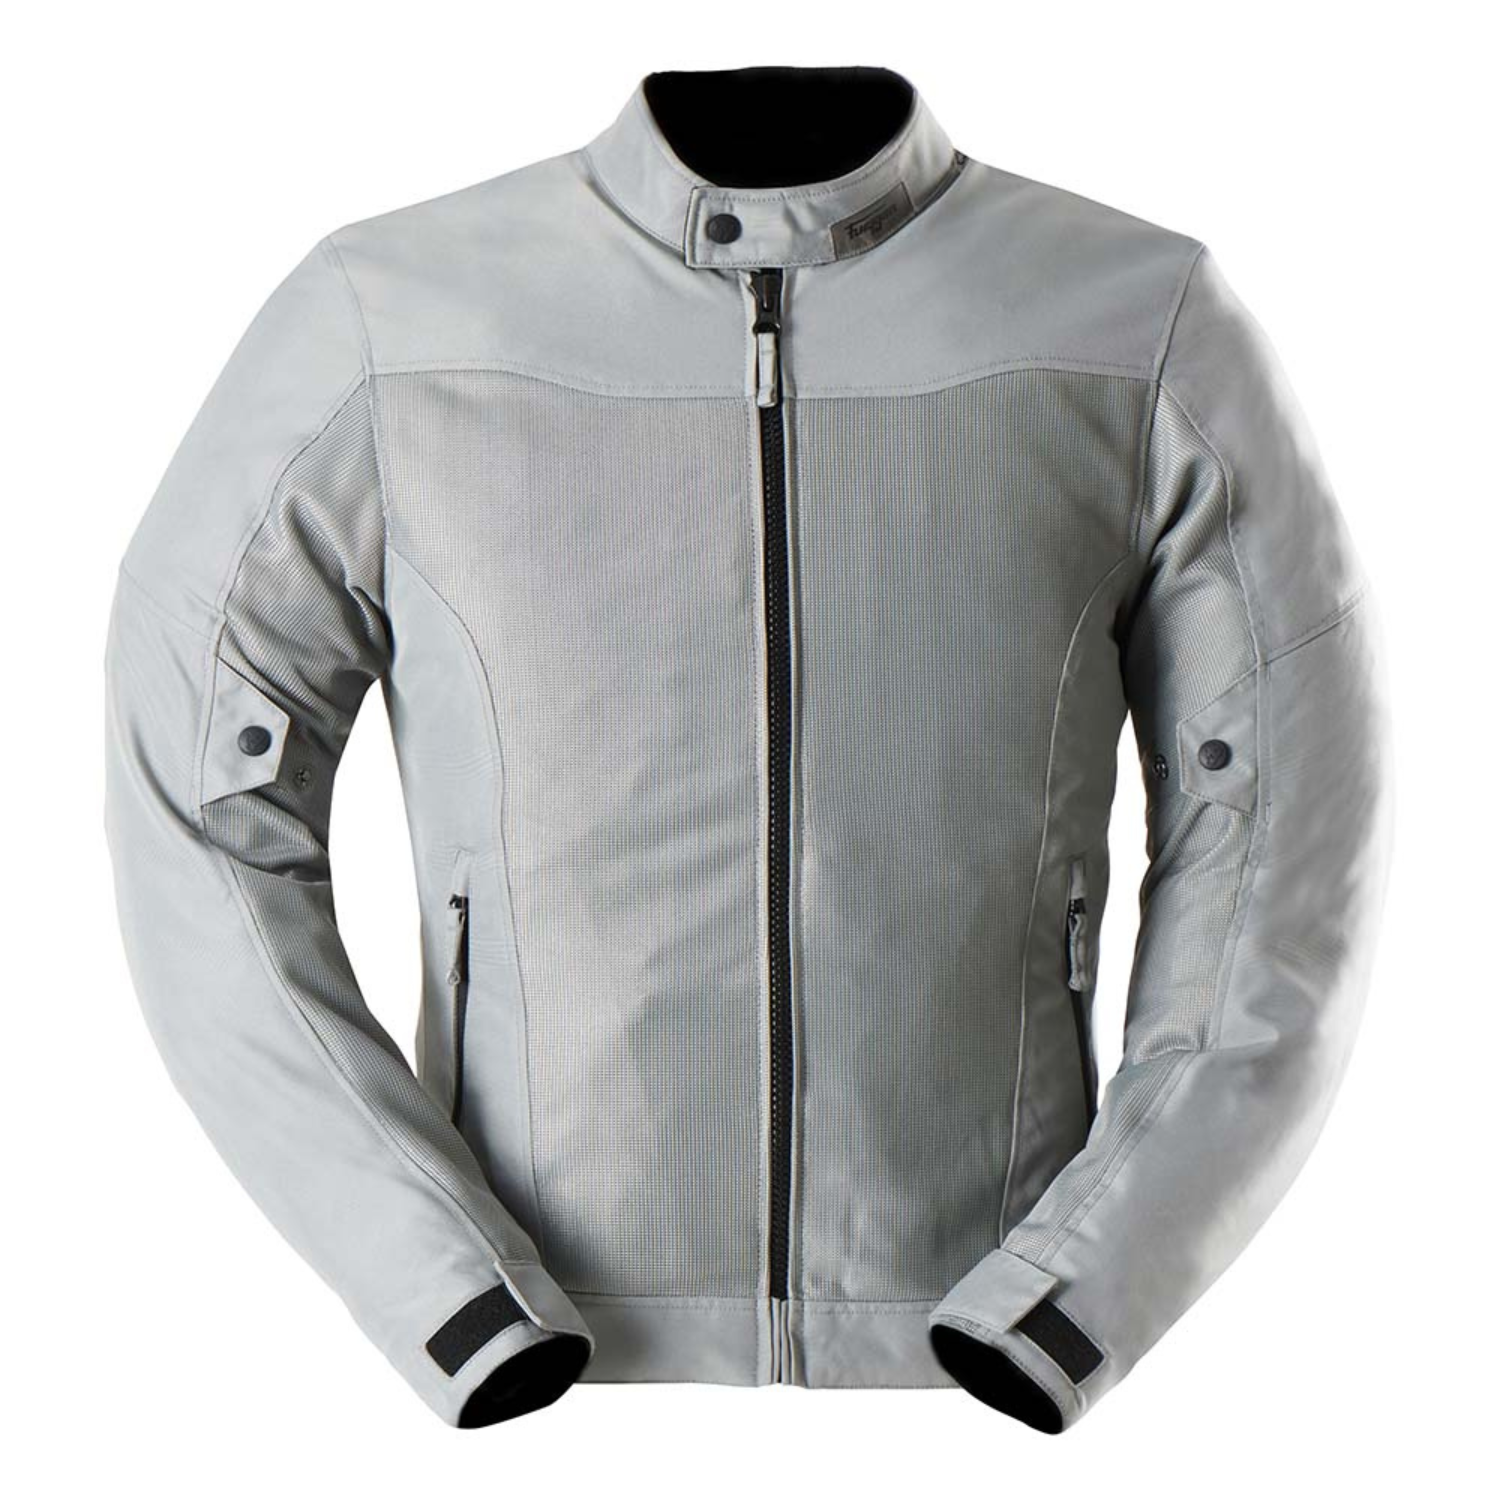 Image of Furygan Mistral Evo 3 Jacket Grey Size 2XL ID 3435980362690